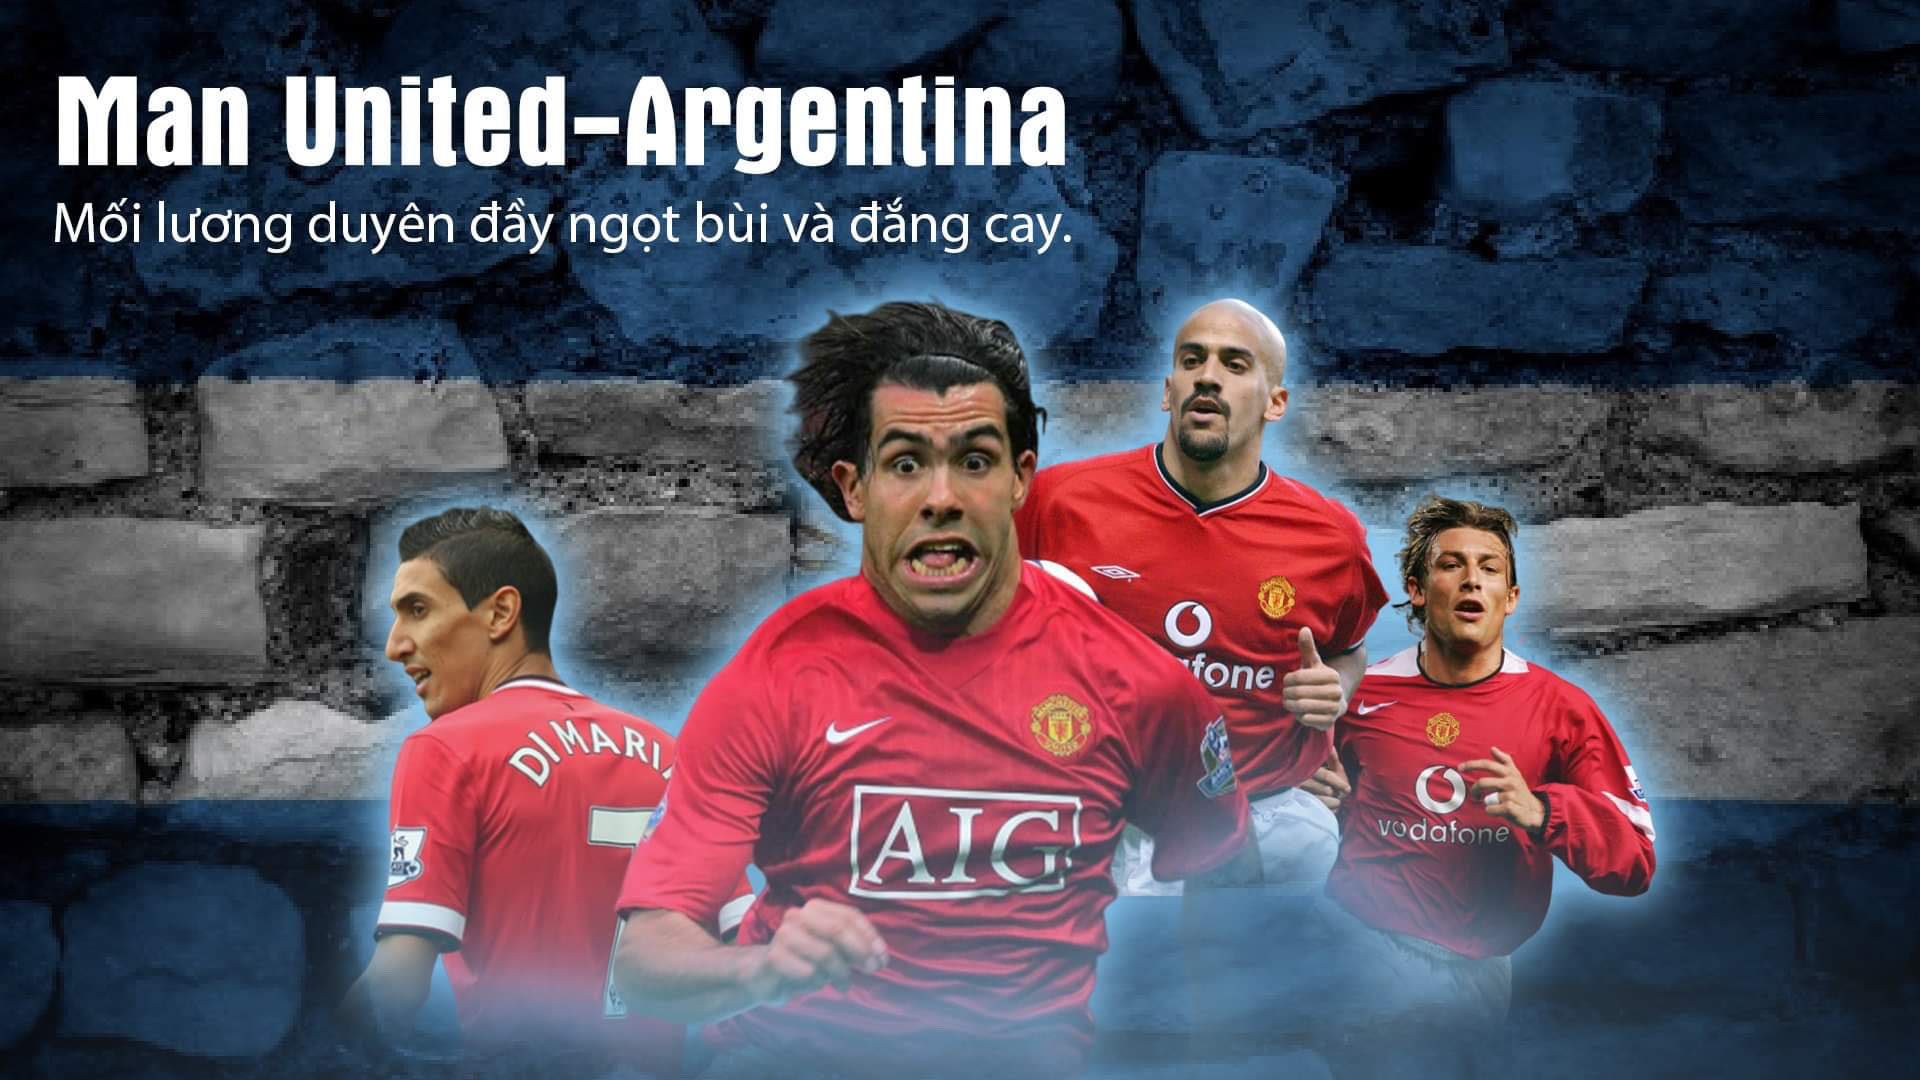 Man United-Argentina: Moi luong duyen day ngot bui va dang cay